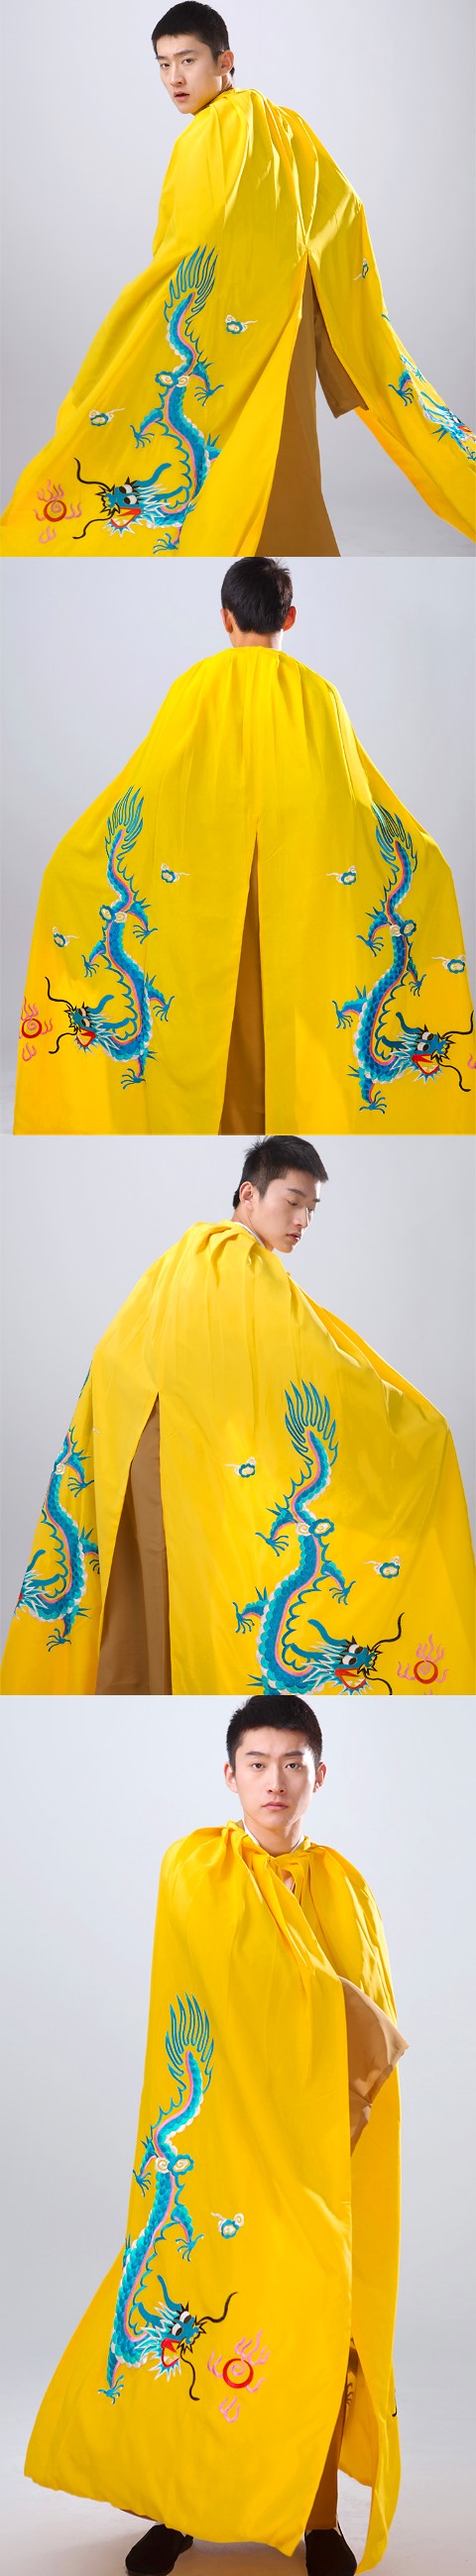 Men's Hanfu Dragon Embroidery Cloak - Yellow (RM)